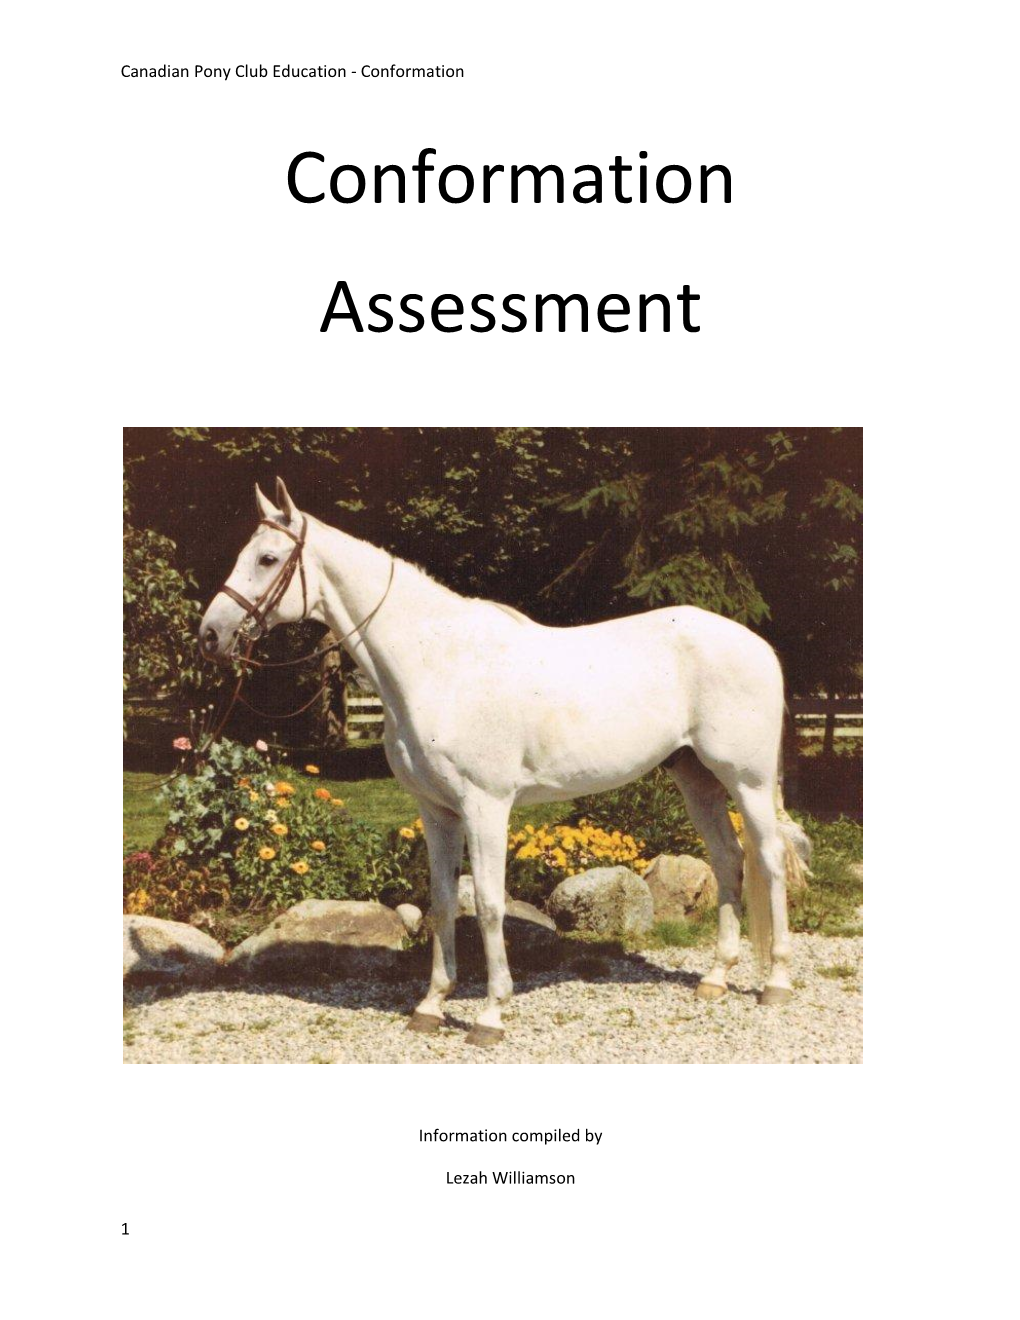 Conformation Assessment